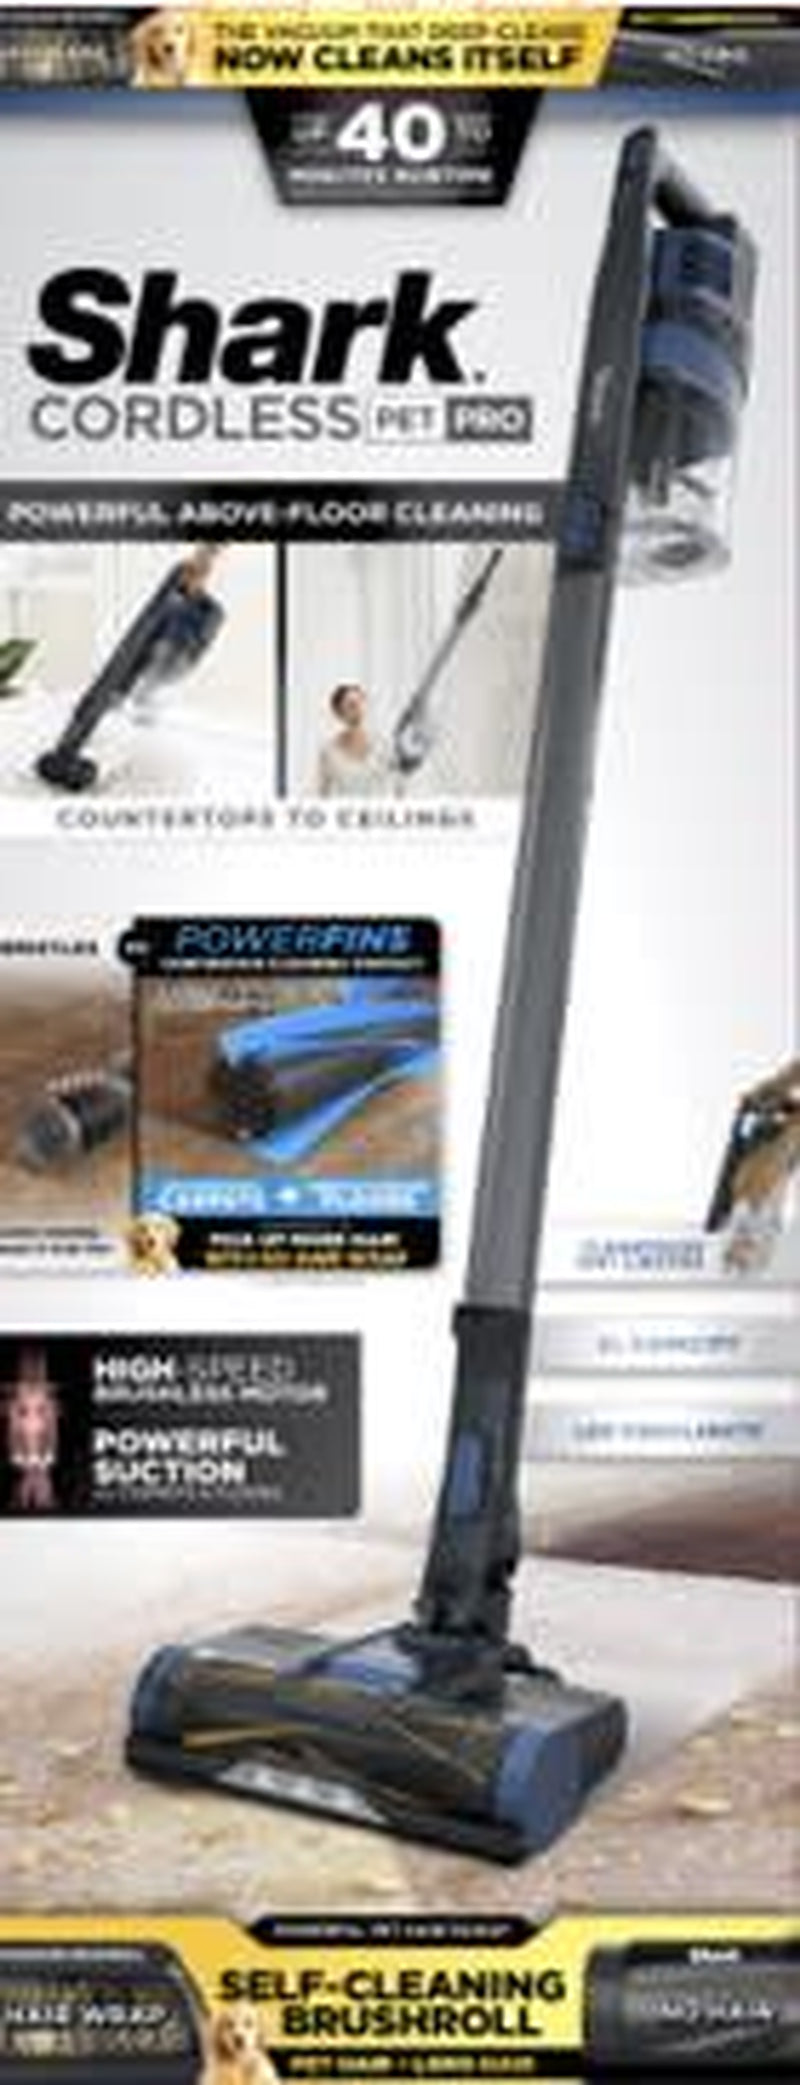 ® Pet Pro Cordless Stick Vacuum with Powerfins Brushroll, Pet Multi-Tool & Crevice Tool Included, 40-Min Runtime, WZ250